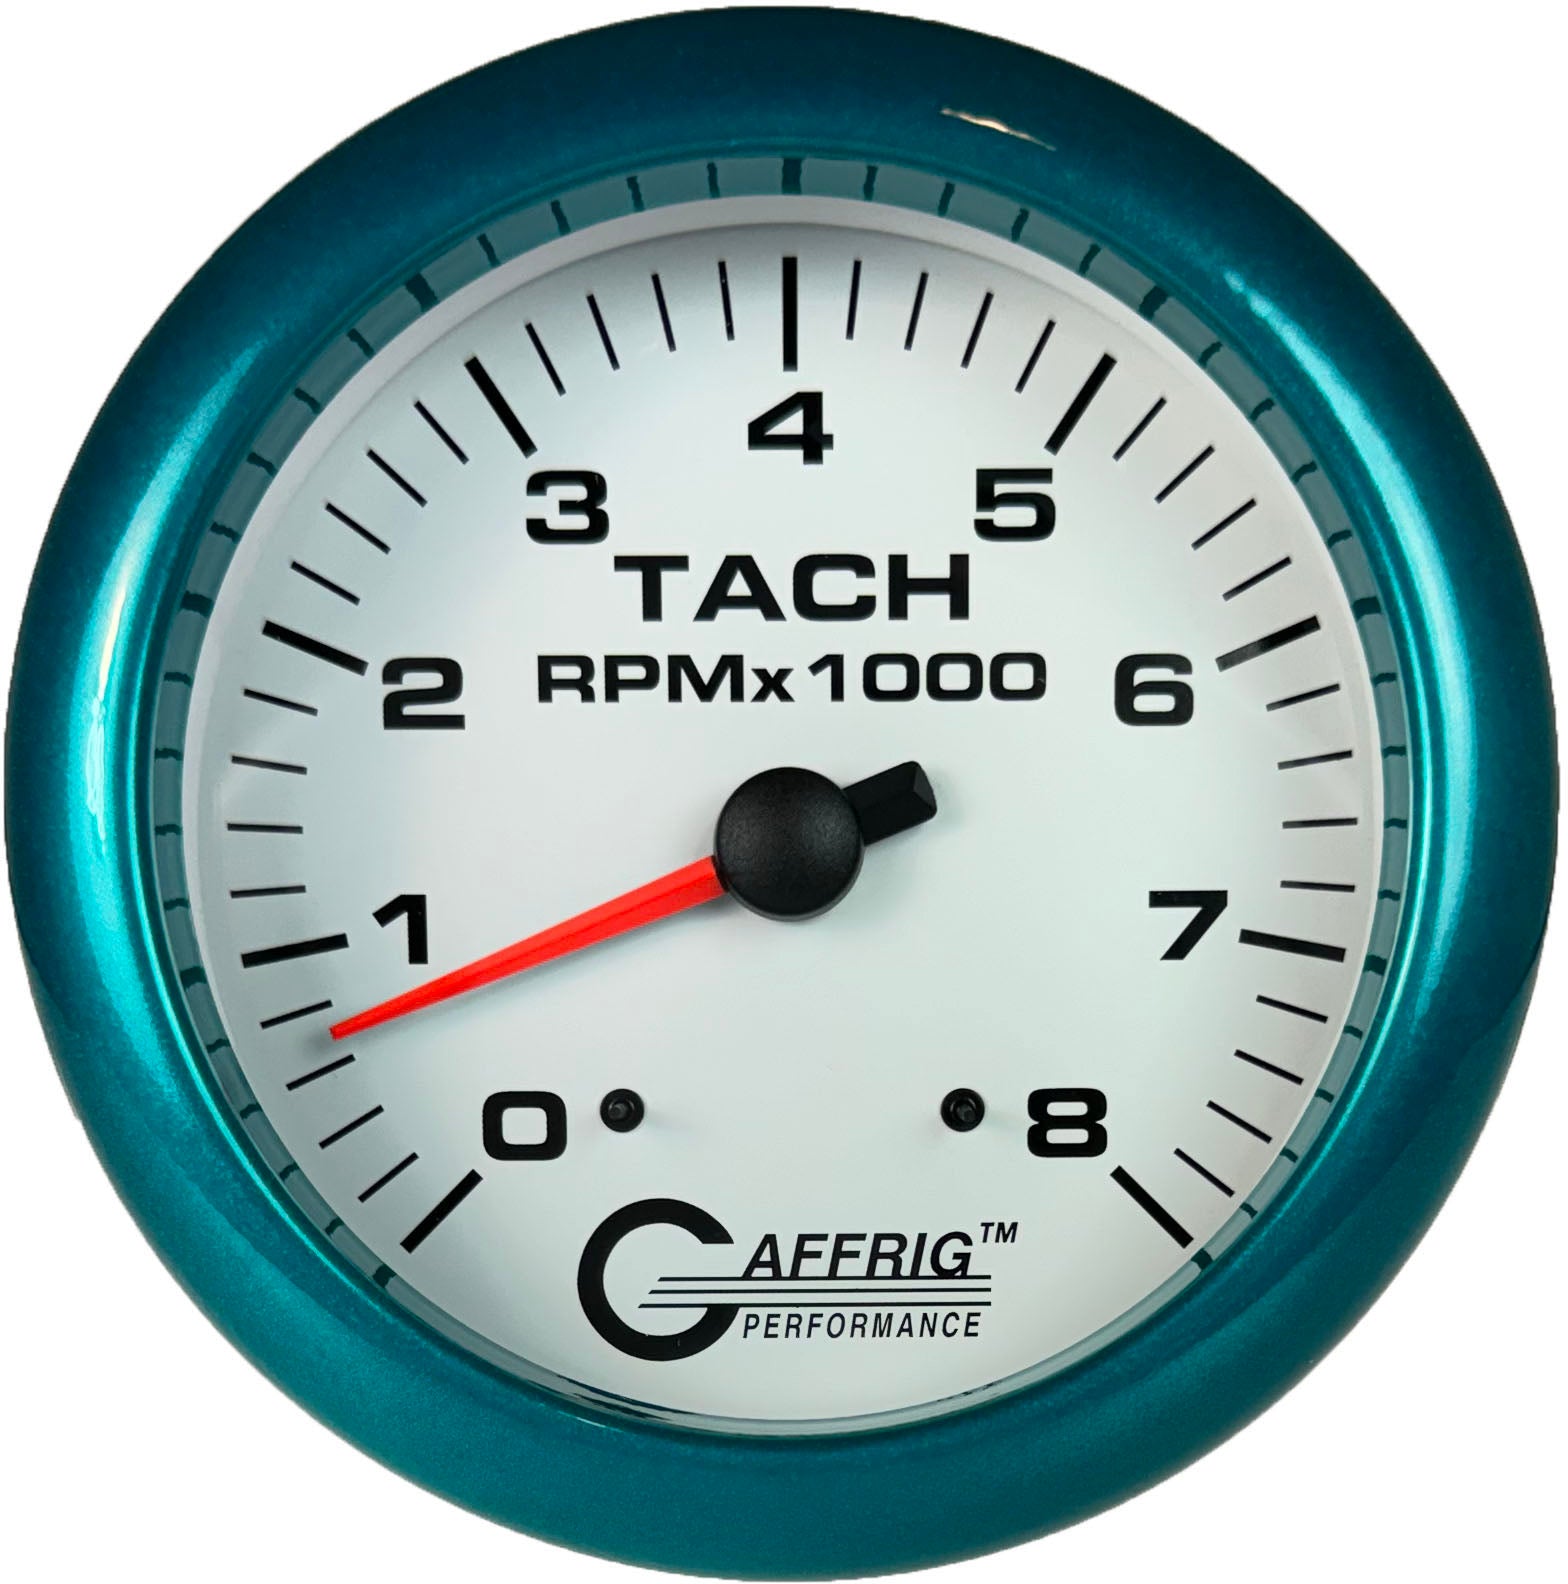 GAFFRIG PART #10019 4 5/8 INCH ELECTRIC TACHOMETER GAUGE 0-8000 RPM WHITE TEAL